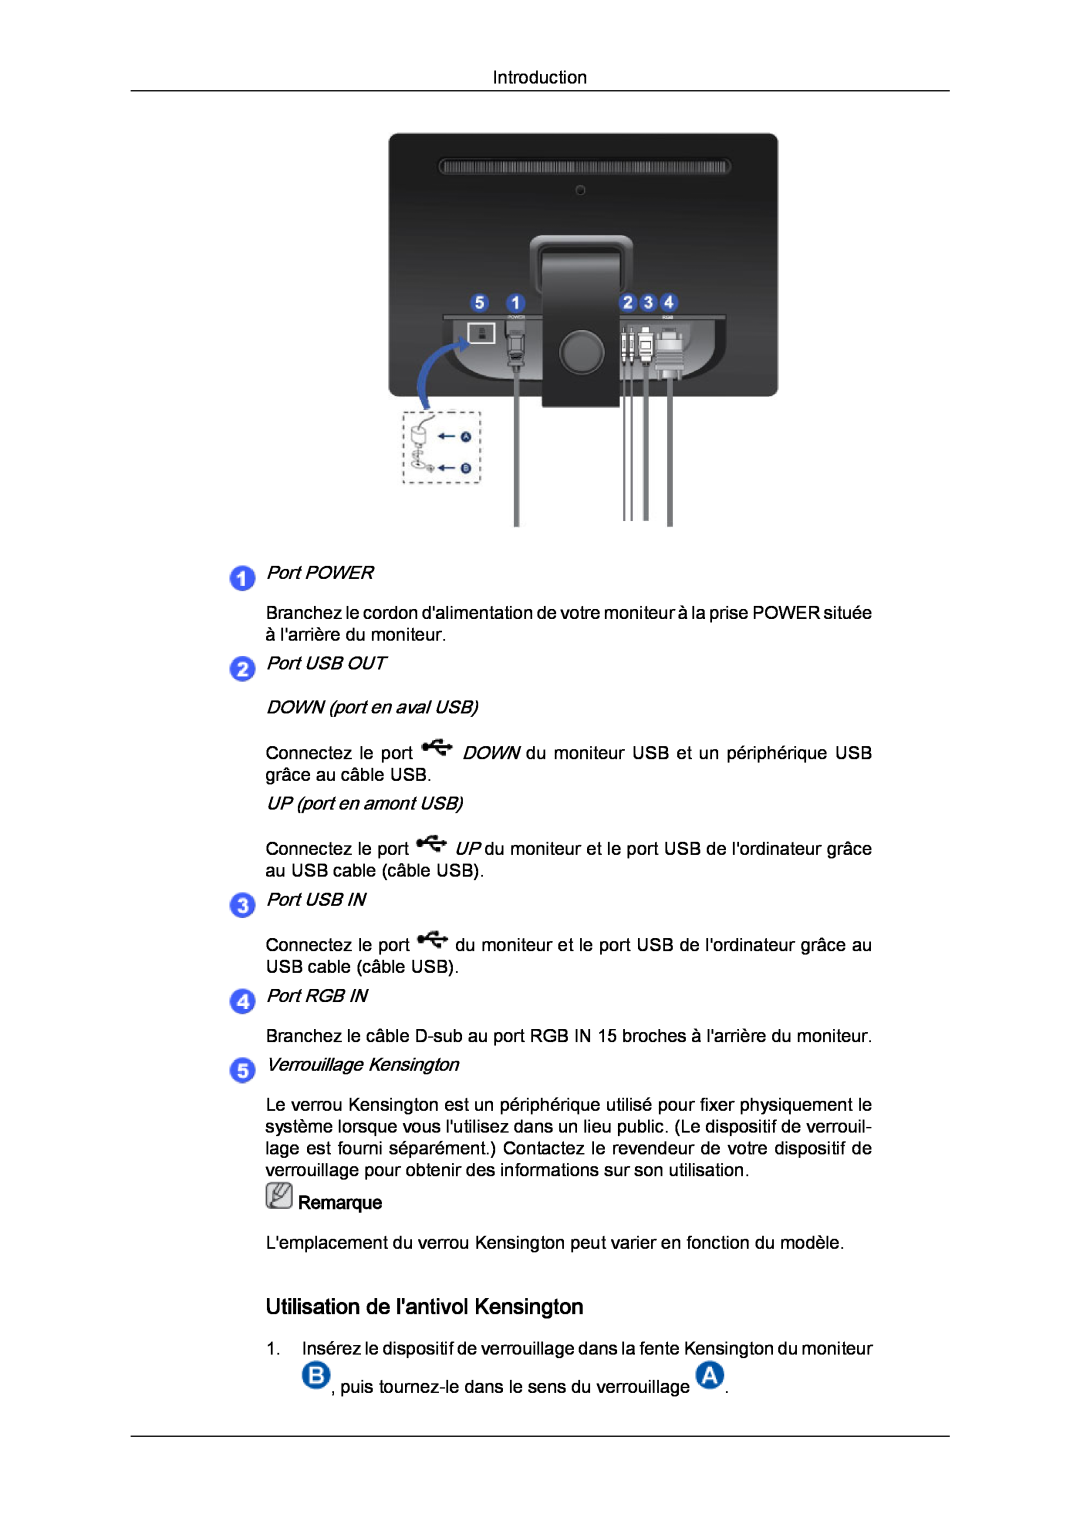 Samsung LS22LFUGFZ/XJ manual DOWN port en aval USB, UP port en amont USB, Port USB IN, Utilisation de lantivol Kensington 